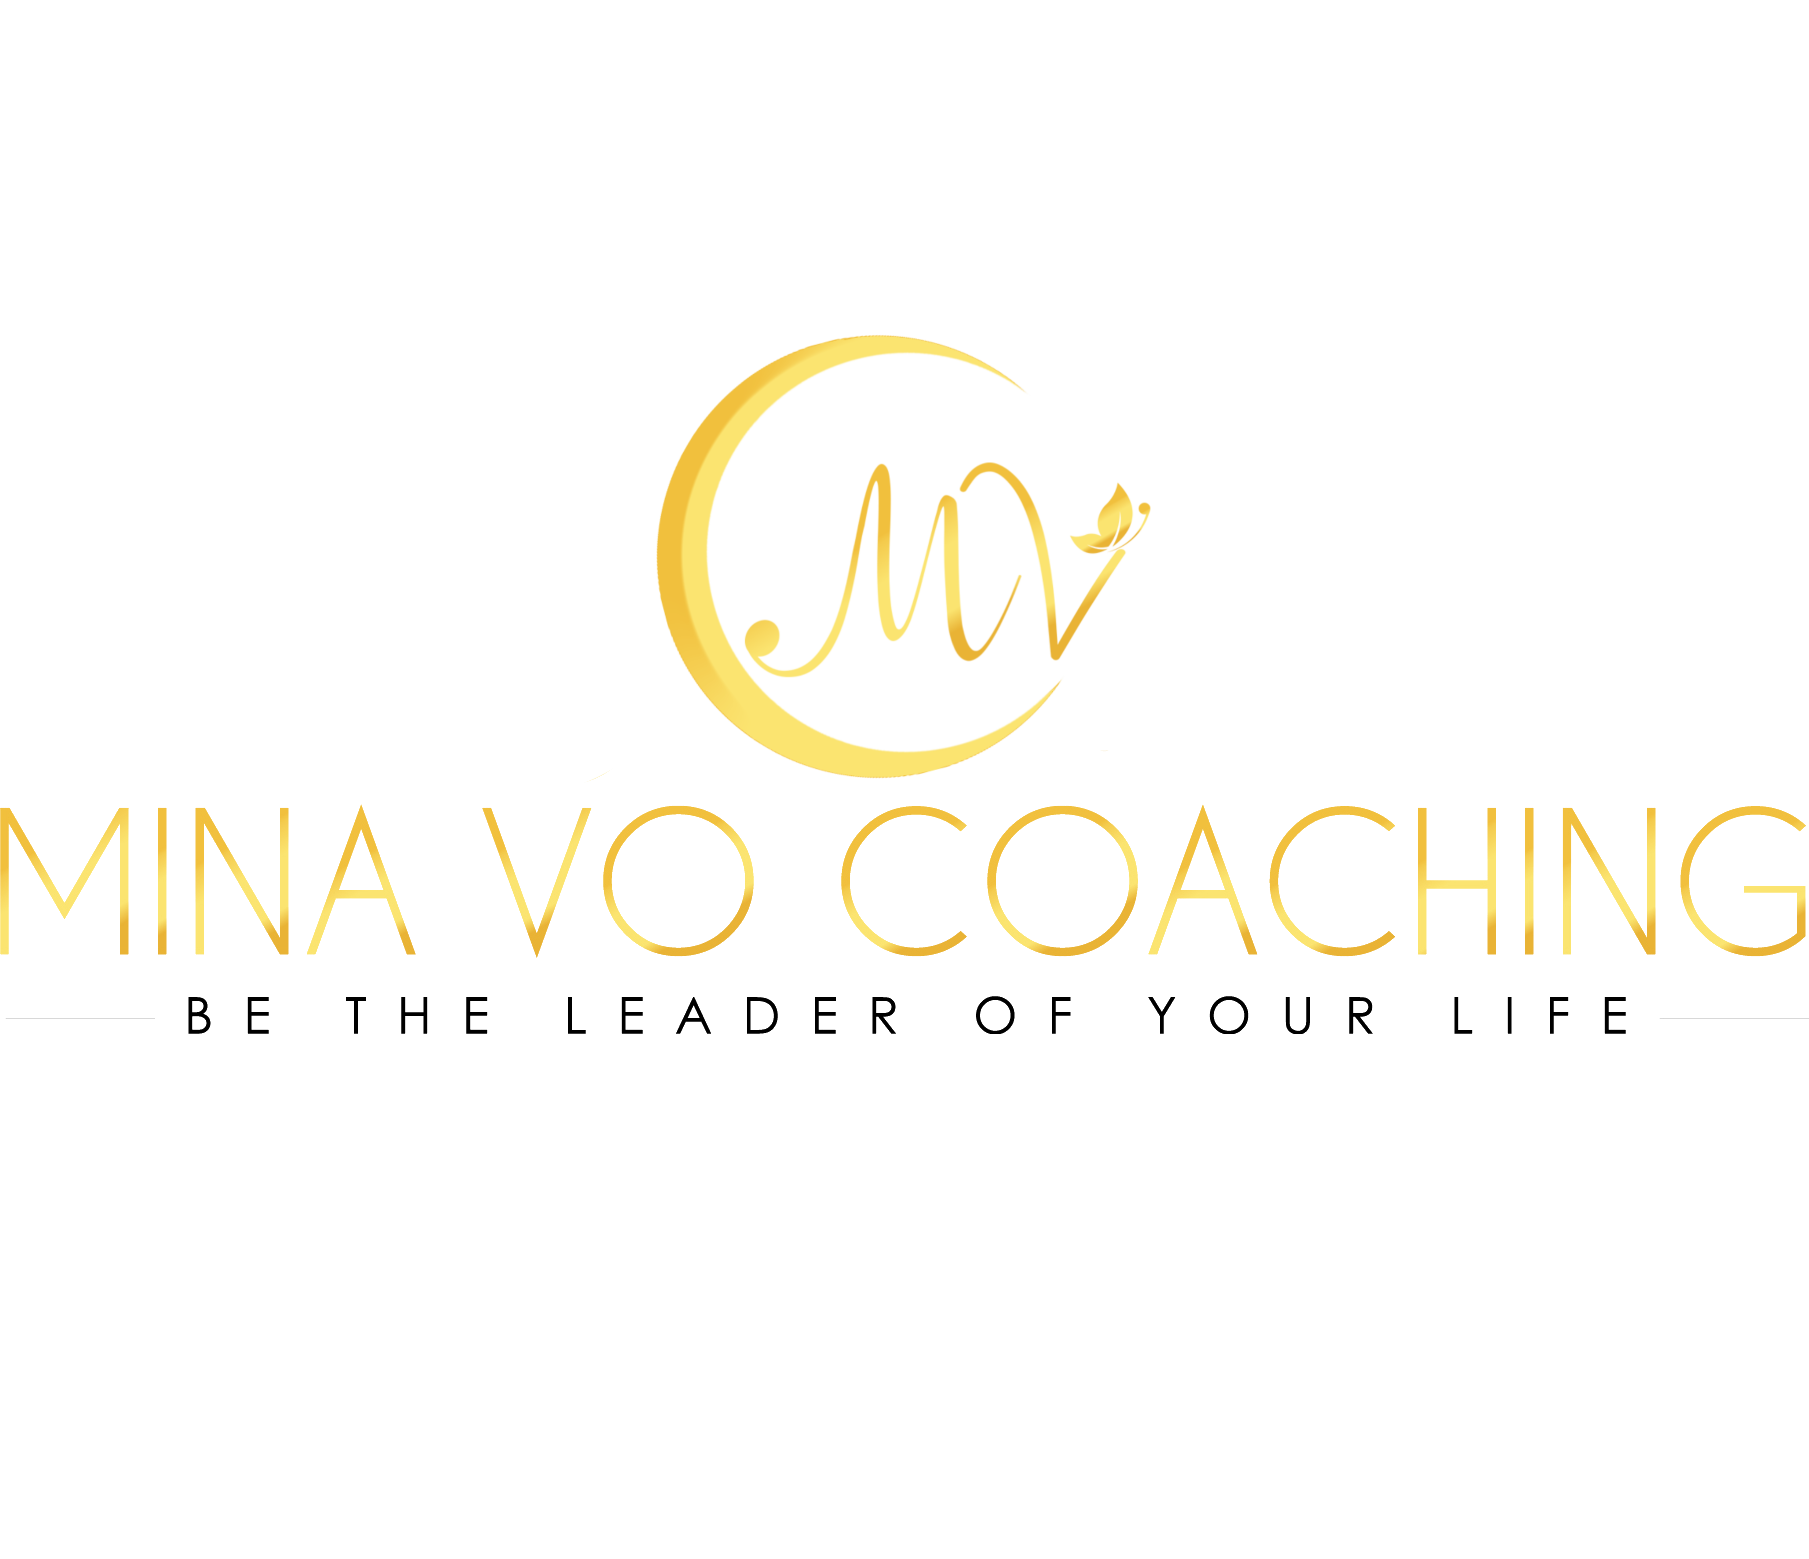 Mina Vo Coaching